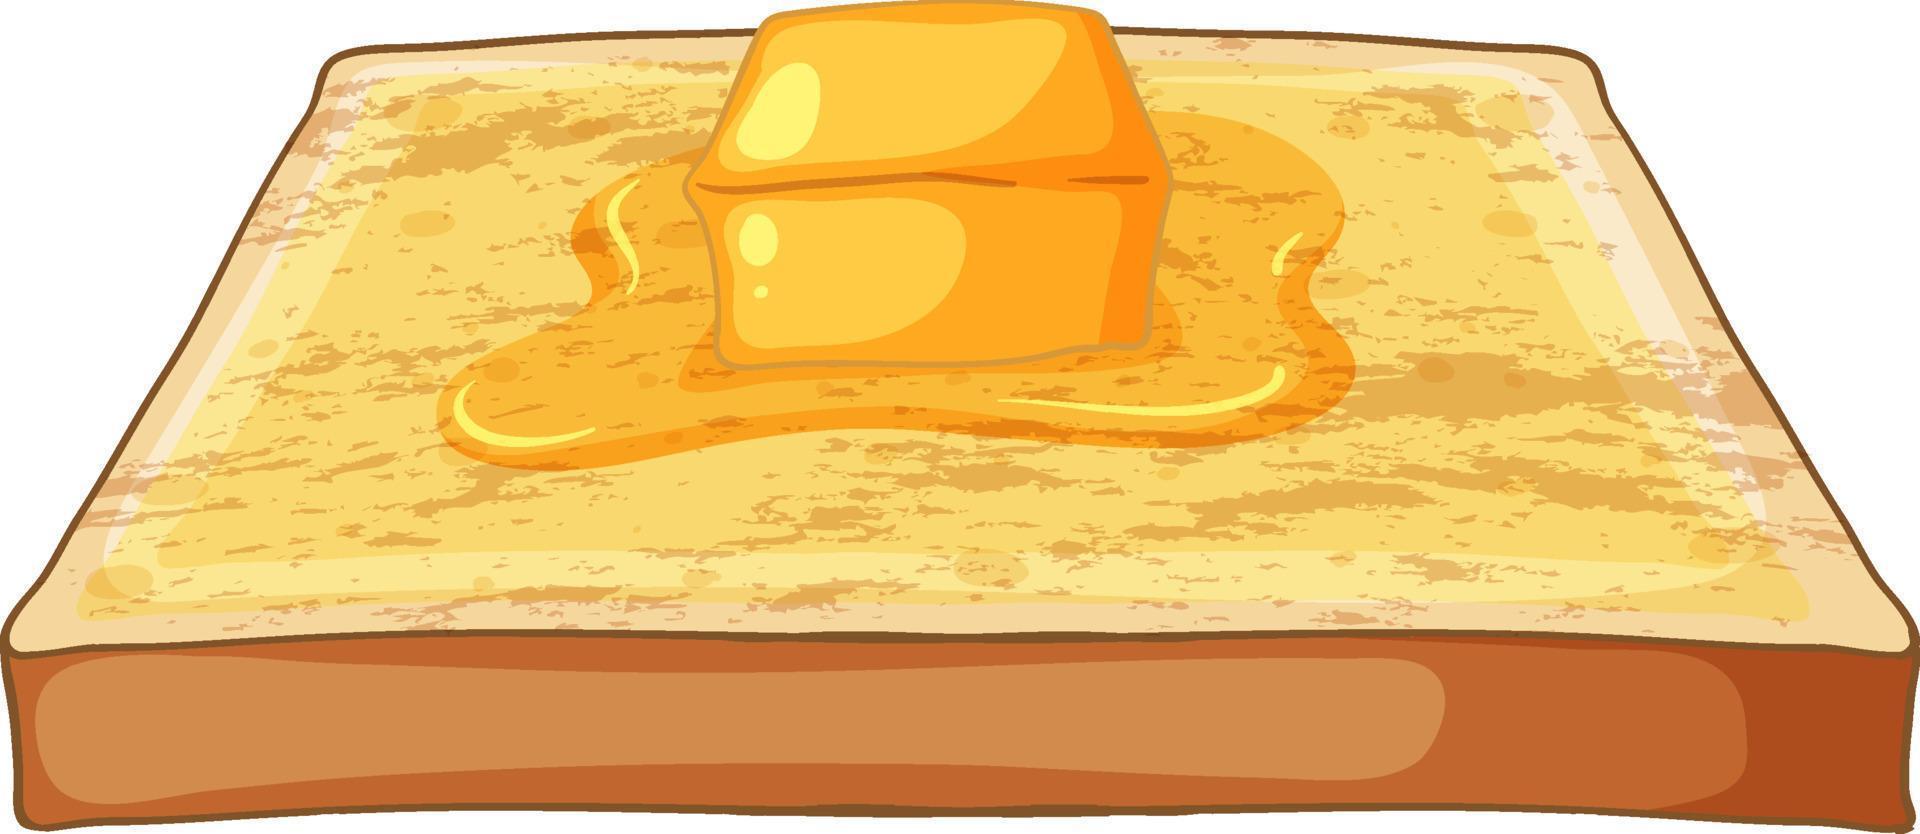 pão de manteiga delicioso isolado vetor